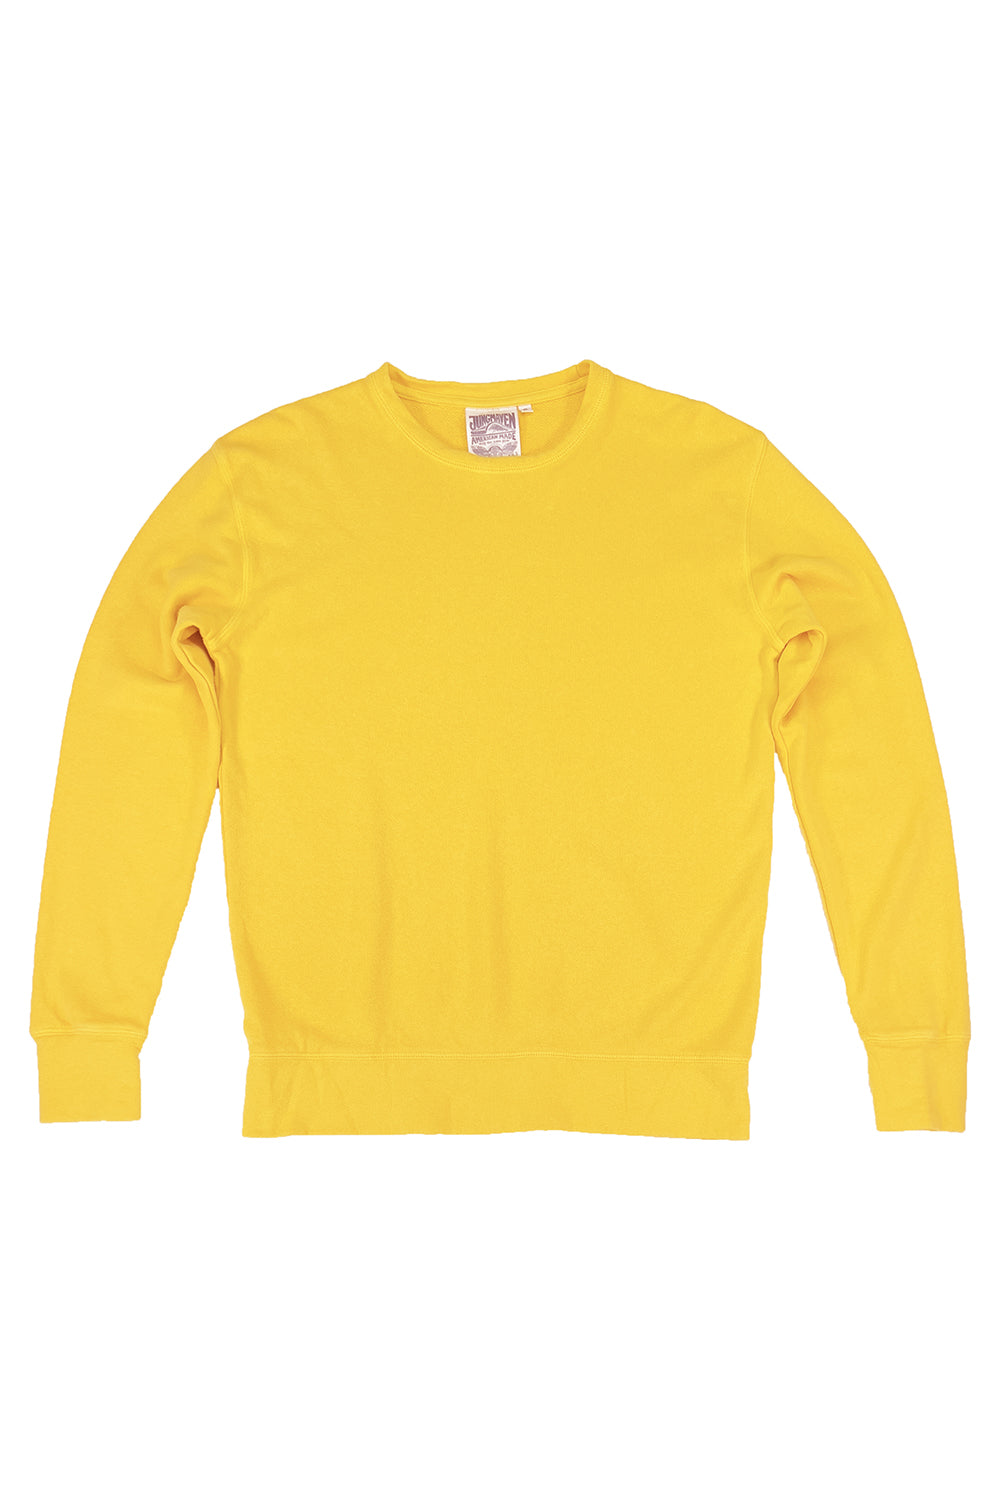 Tahoe Sweatshirt - Sale Colors | Jungmaven Hemp Clothing & Accessories / Color: Sunshine Yellow